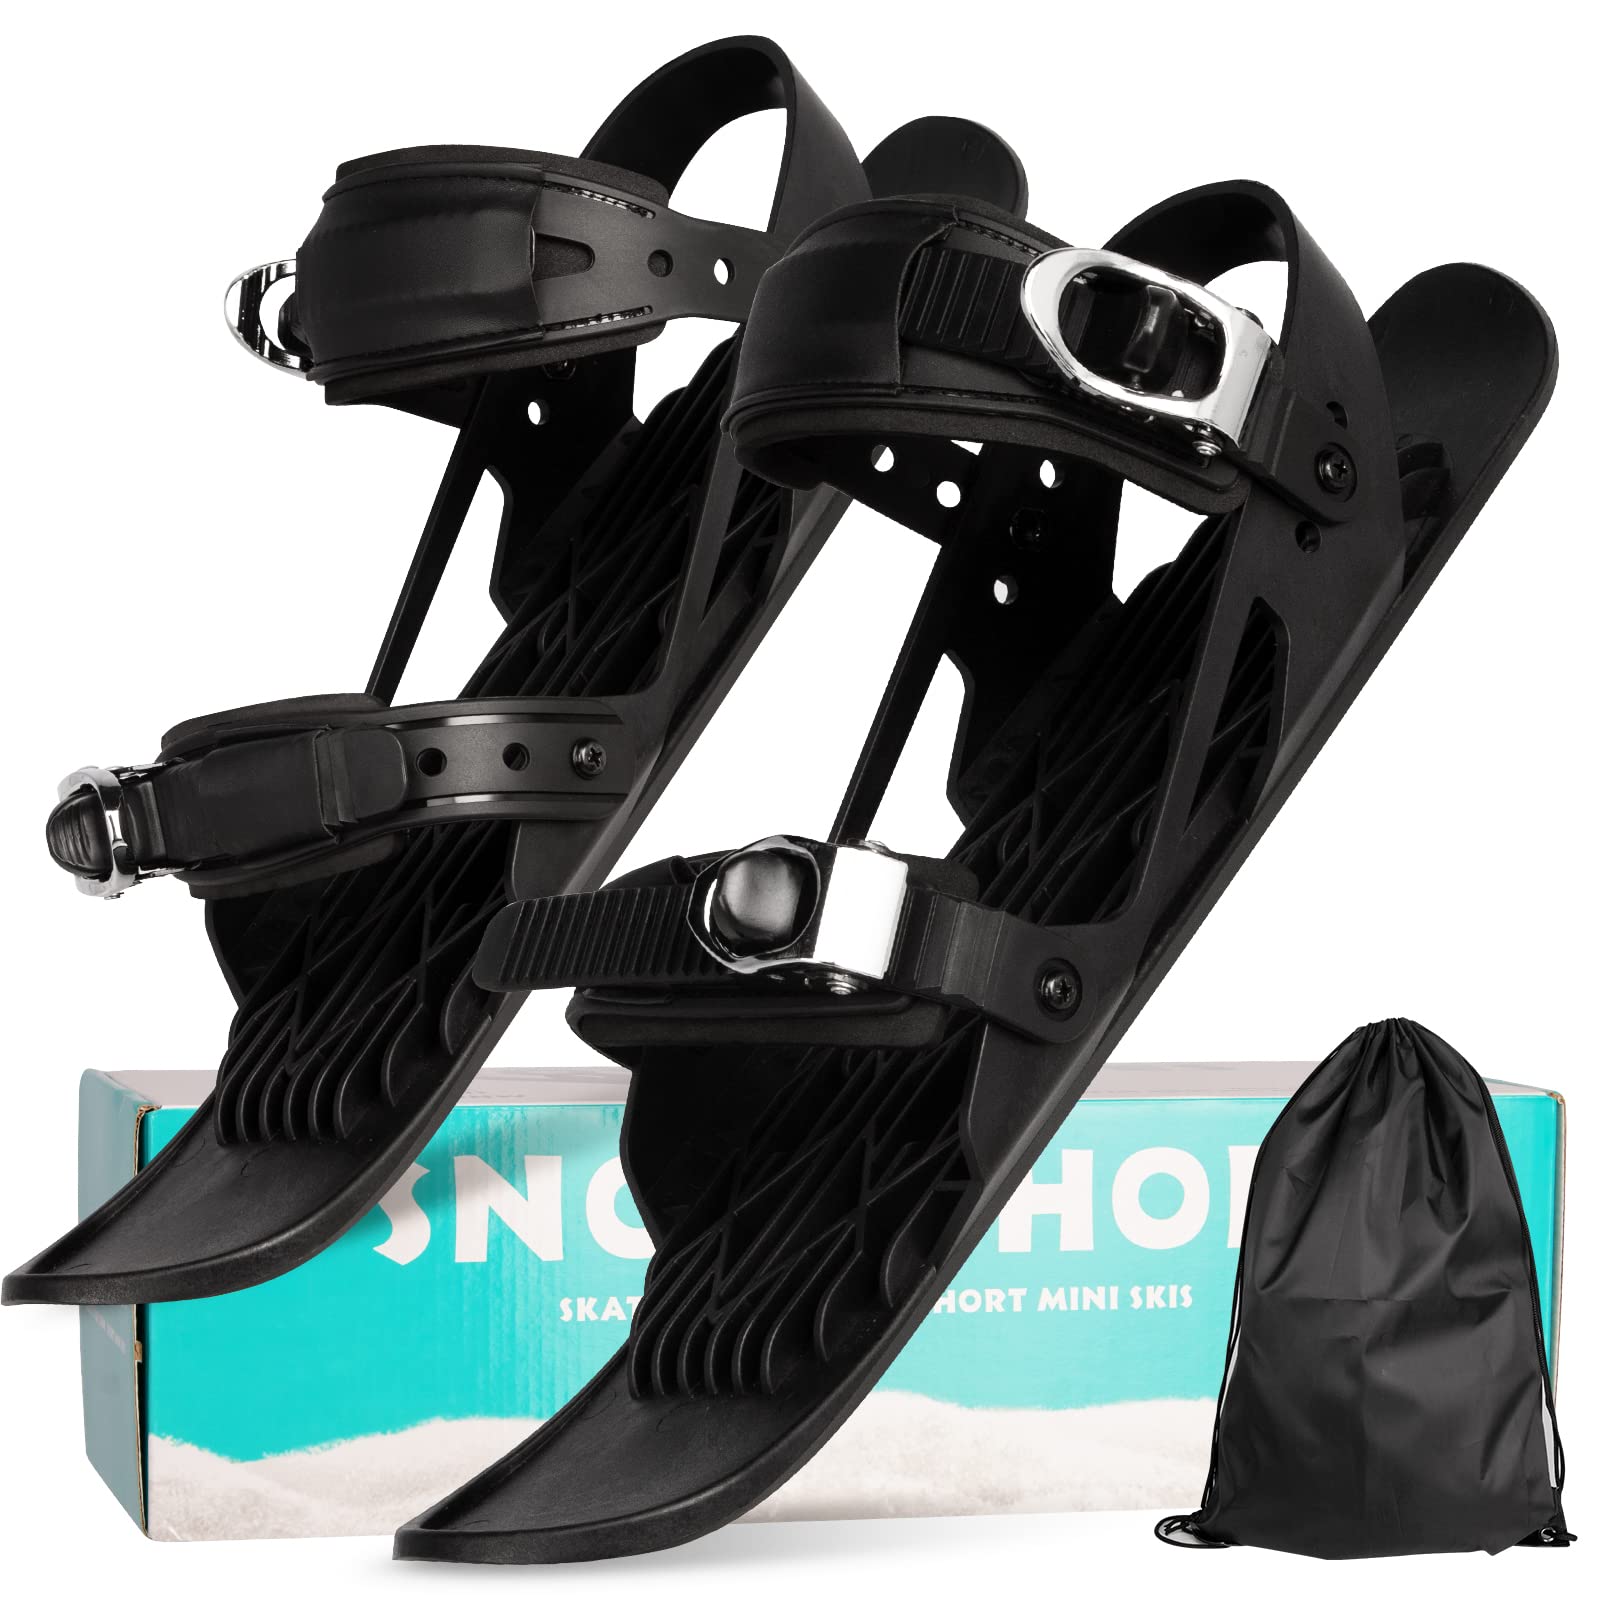 UPBUD Upgrade Adjustable Short Mini Ski Skates Winter Snowskates Outdoor Ski Shoes for Winter Sport Skiing Equipment